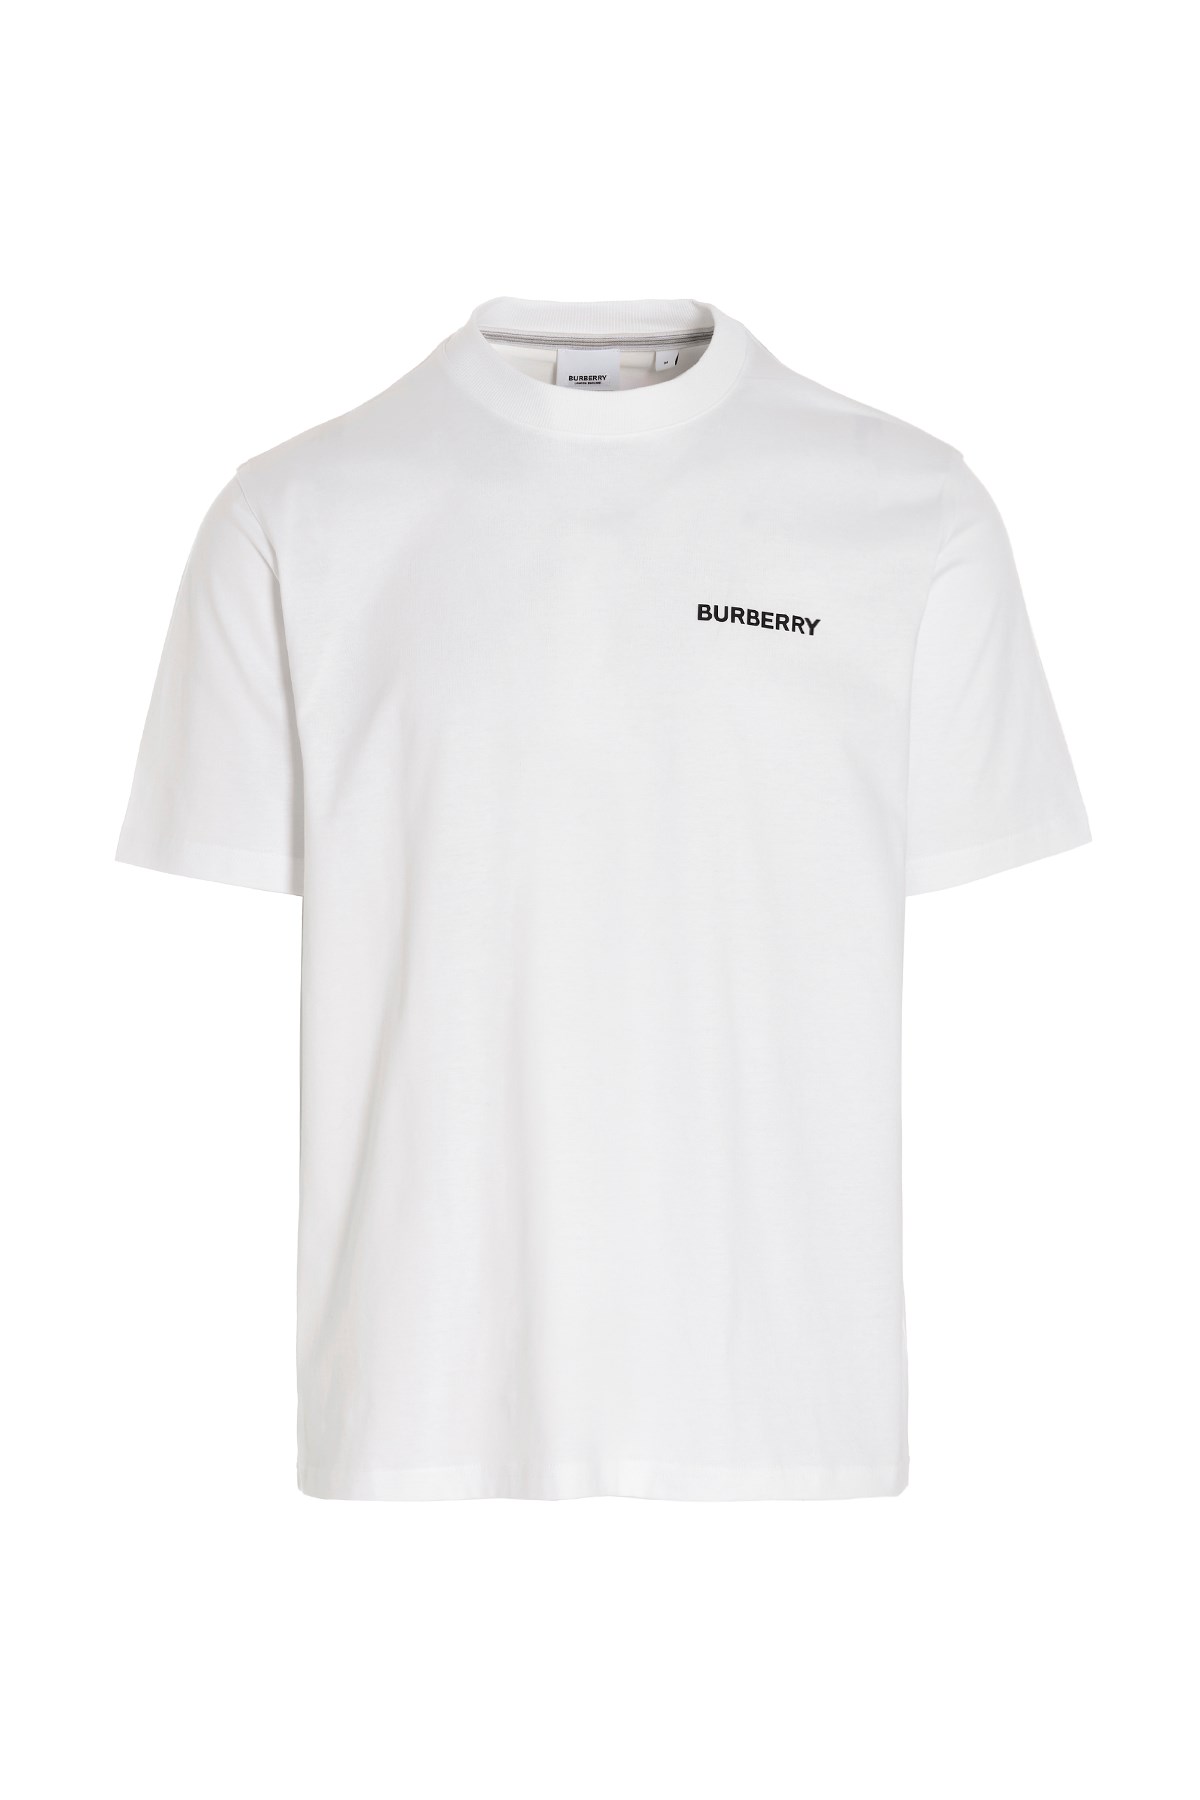 BURBERRY ‘Mac’ T-Shirt